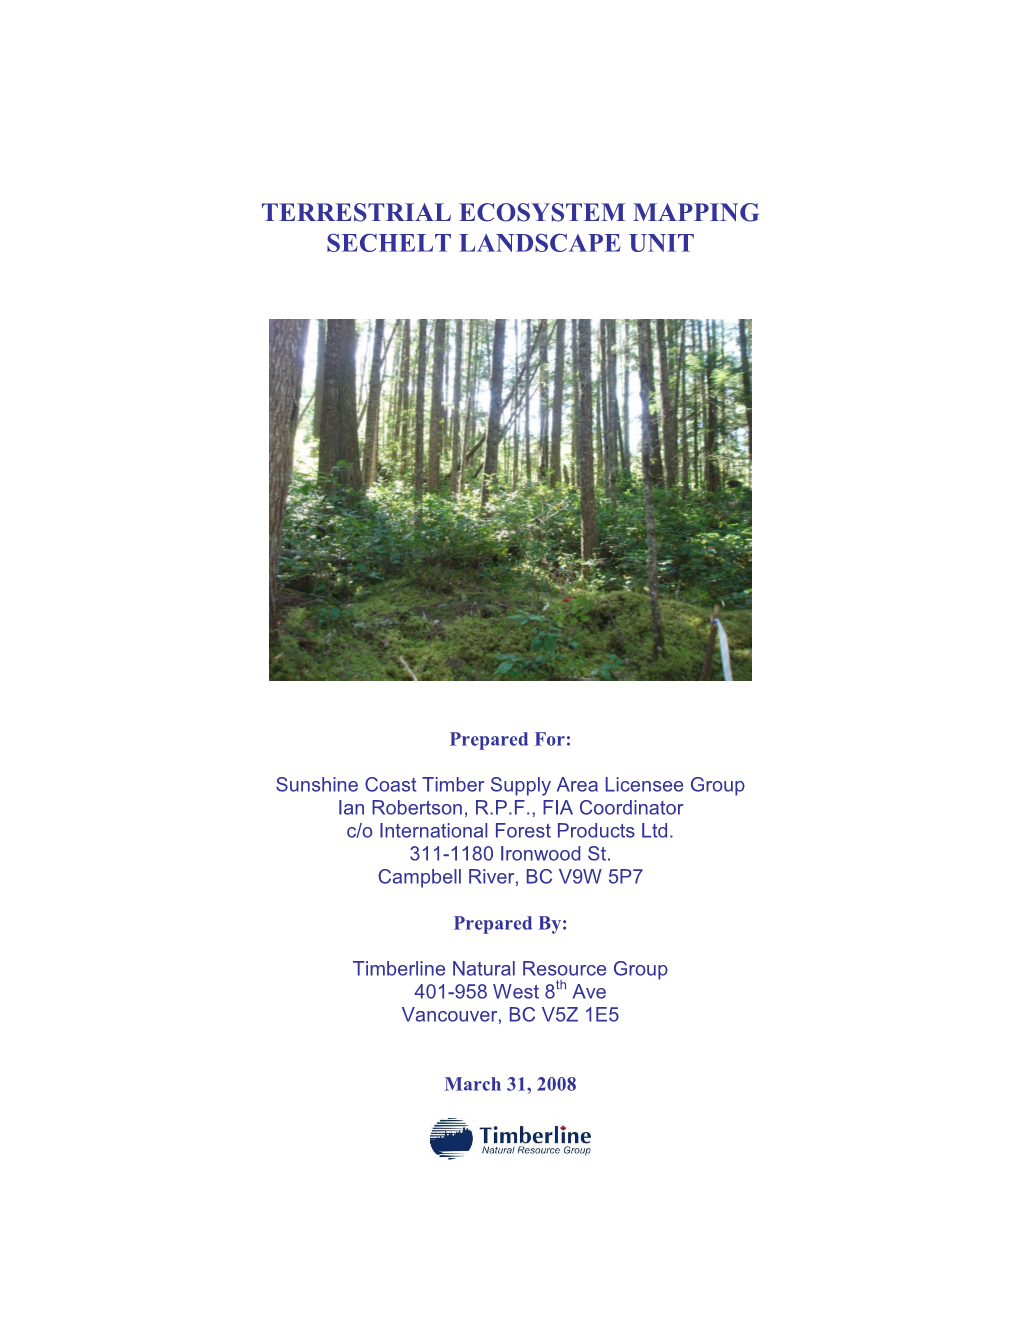 Terrestrial Ecosystem Mapping Sechelt Landscape Unit